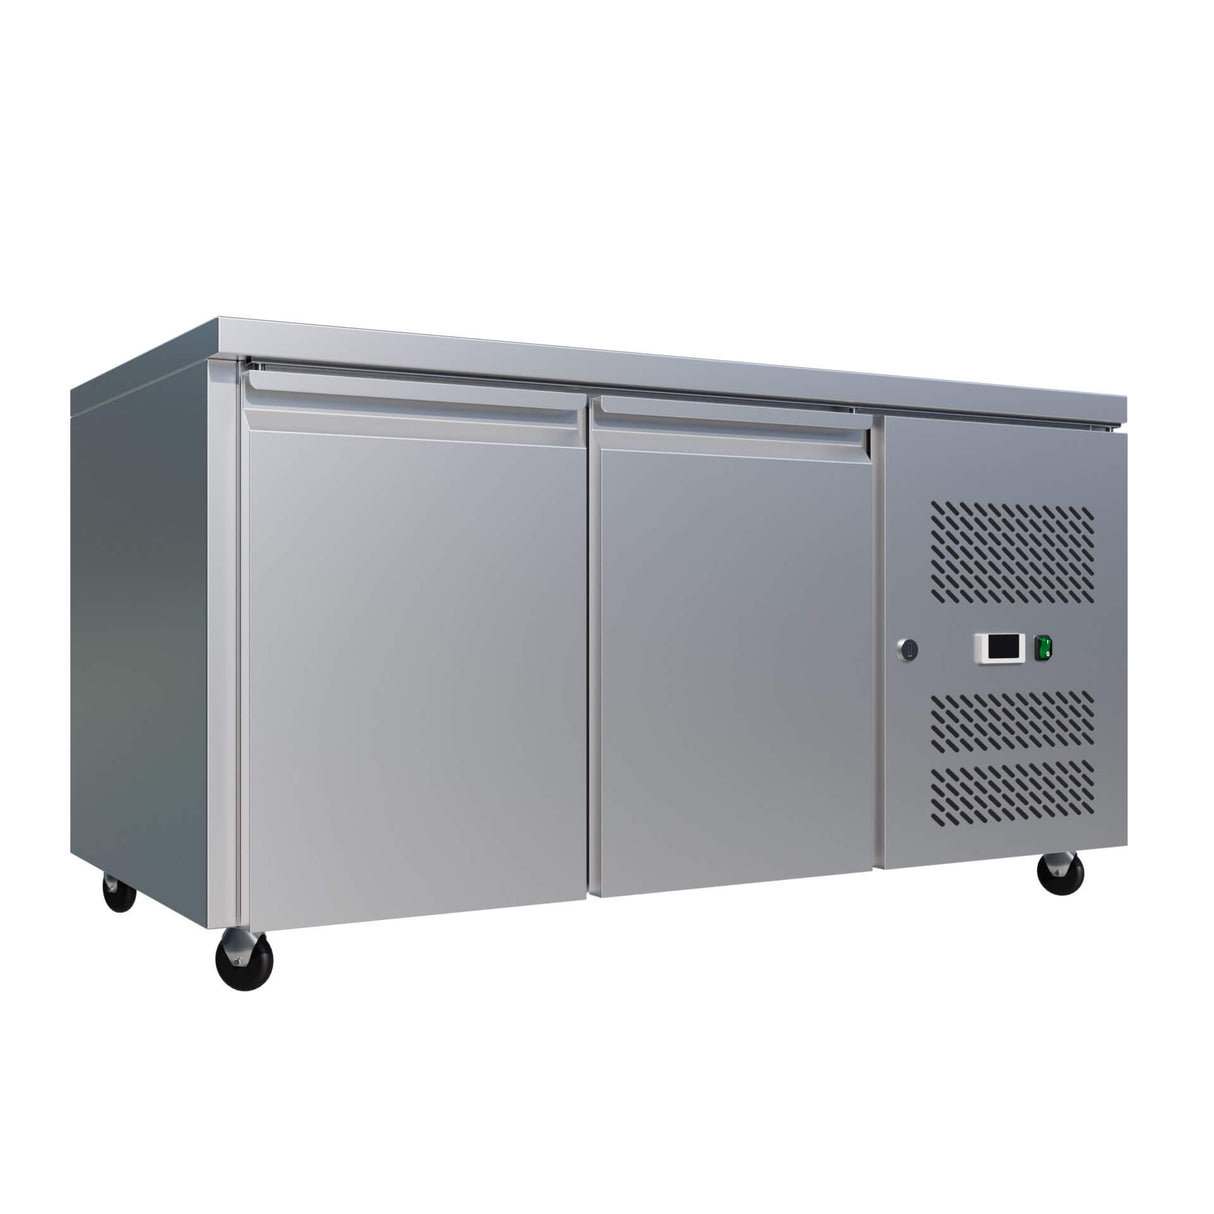 Empire Stainless Steel Double Door Counter Refrigerator - GN2100TN Refrigerated Counters - Double Door Empire   